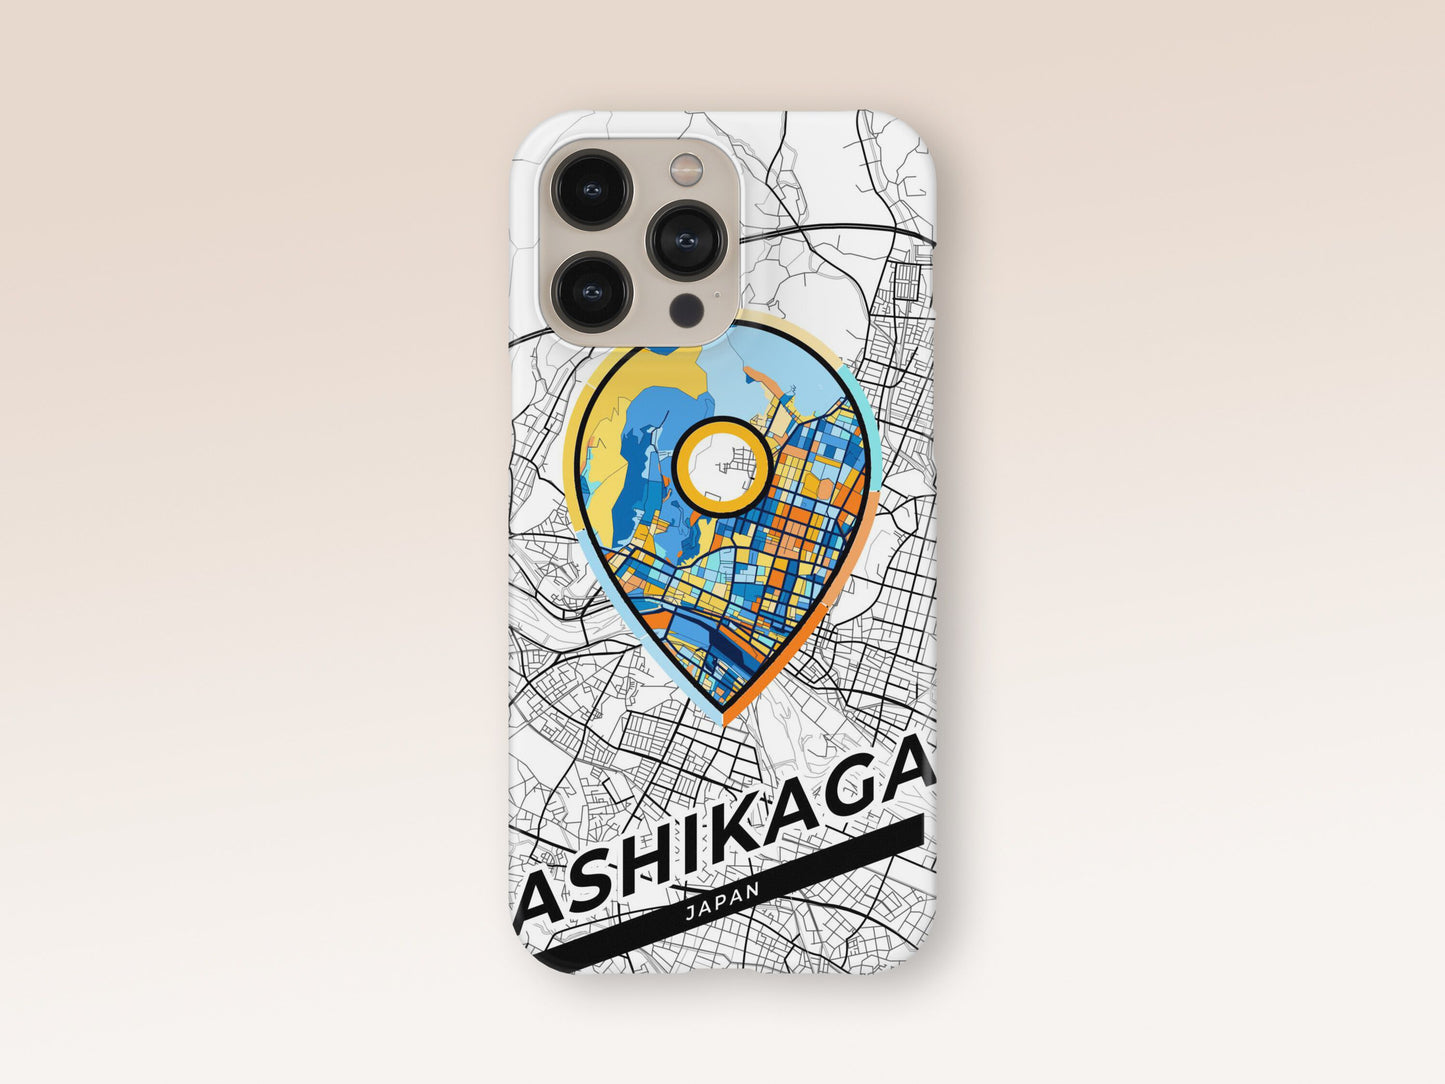 Ashikaga Japan slim phone case with colorful icon. Birthday, wedding or housewarming gift. Couple match cases. 1